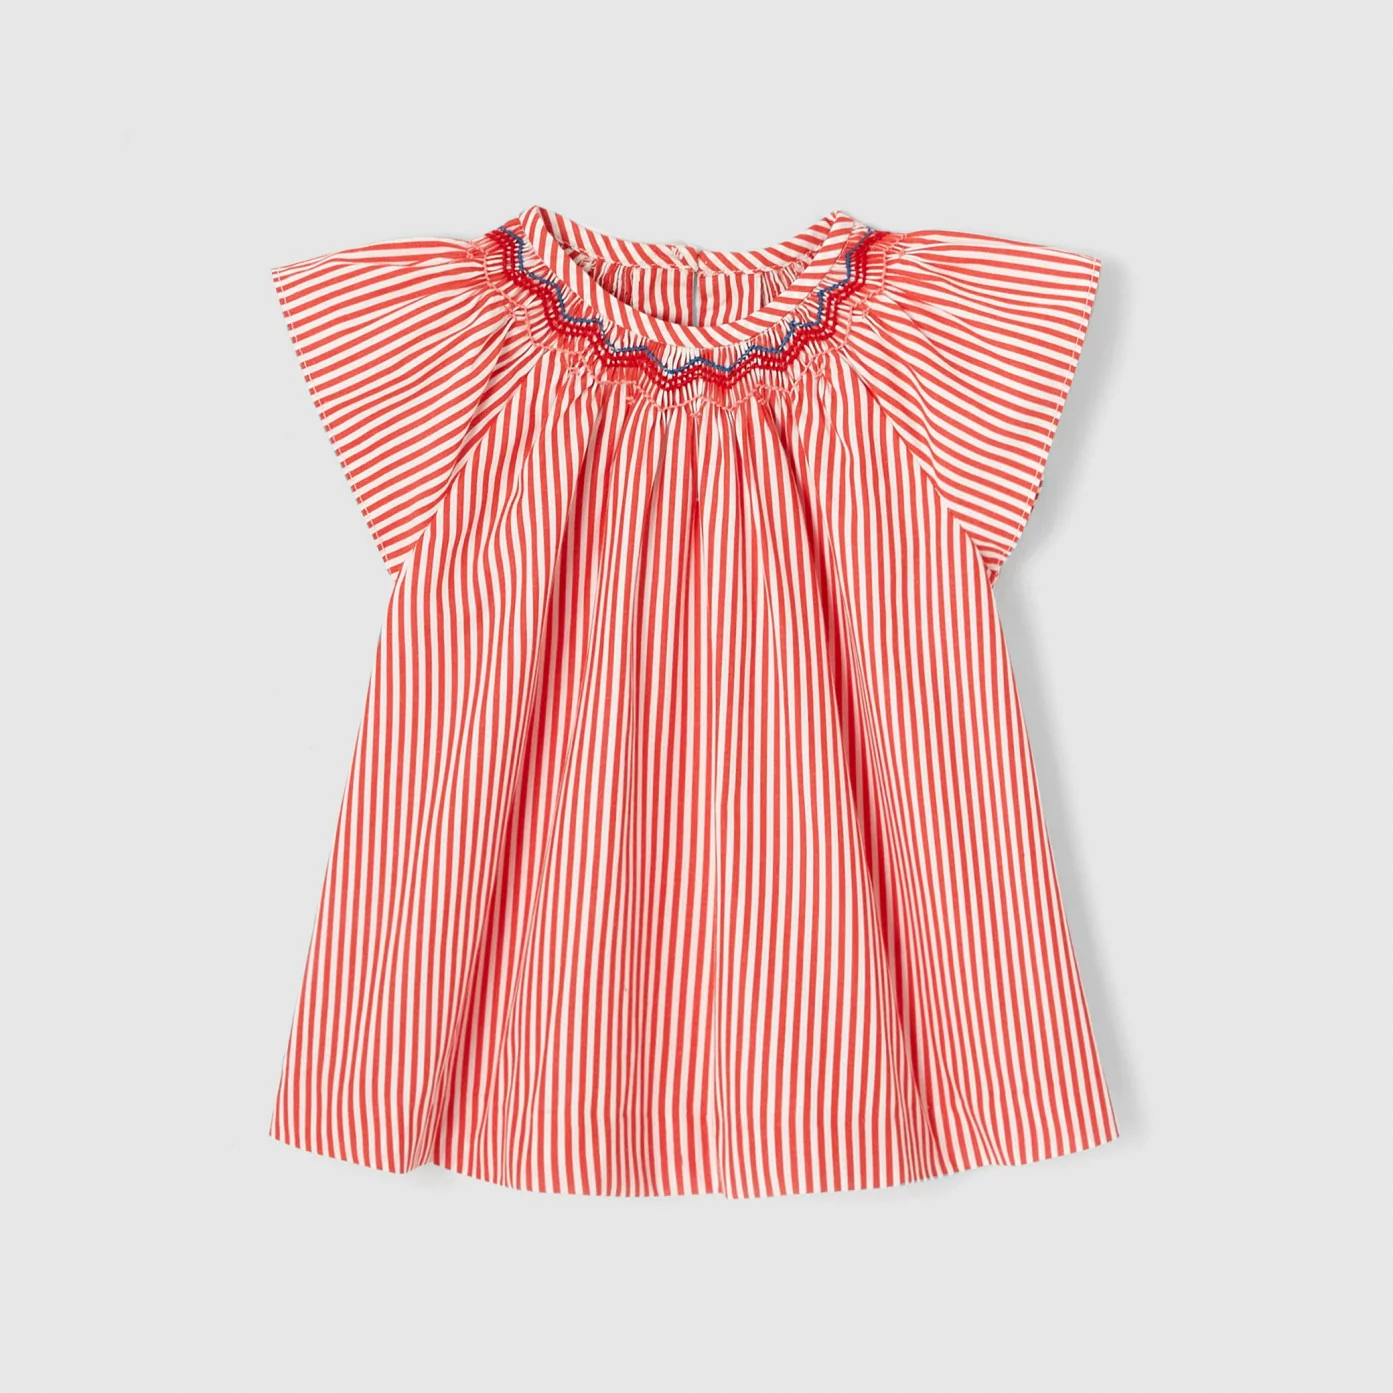 Toddler girl striped blouse